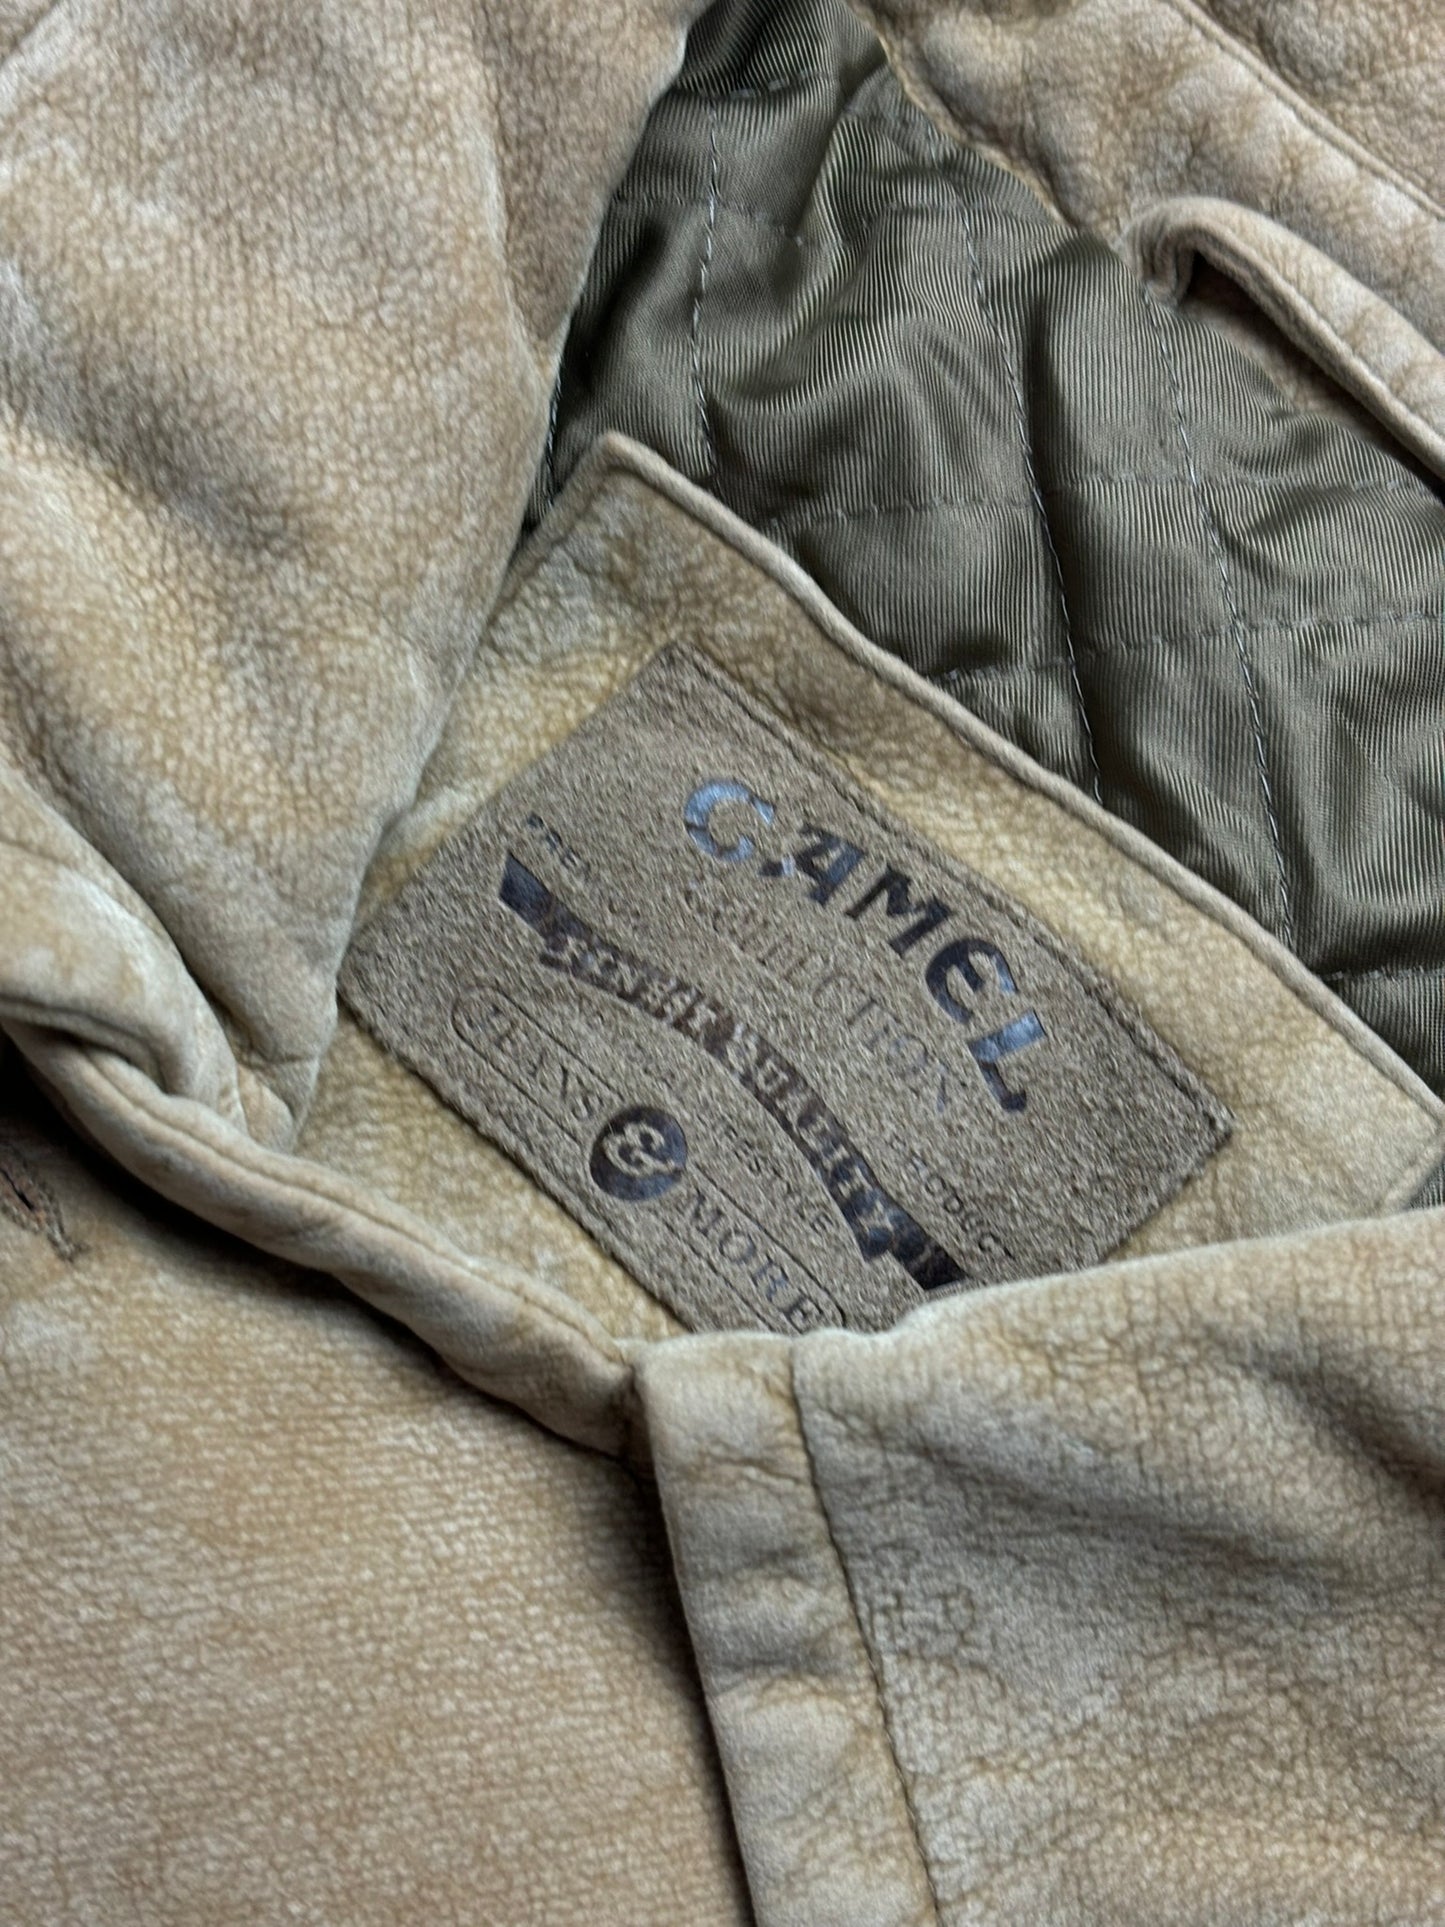 Chaqueta de abrigo Camel Collection archivo retro - Large